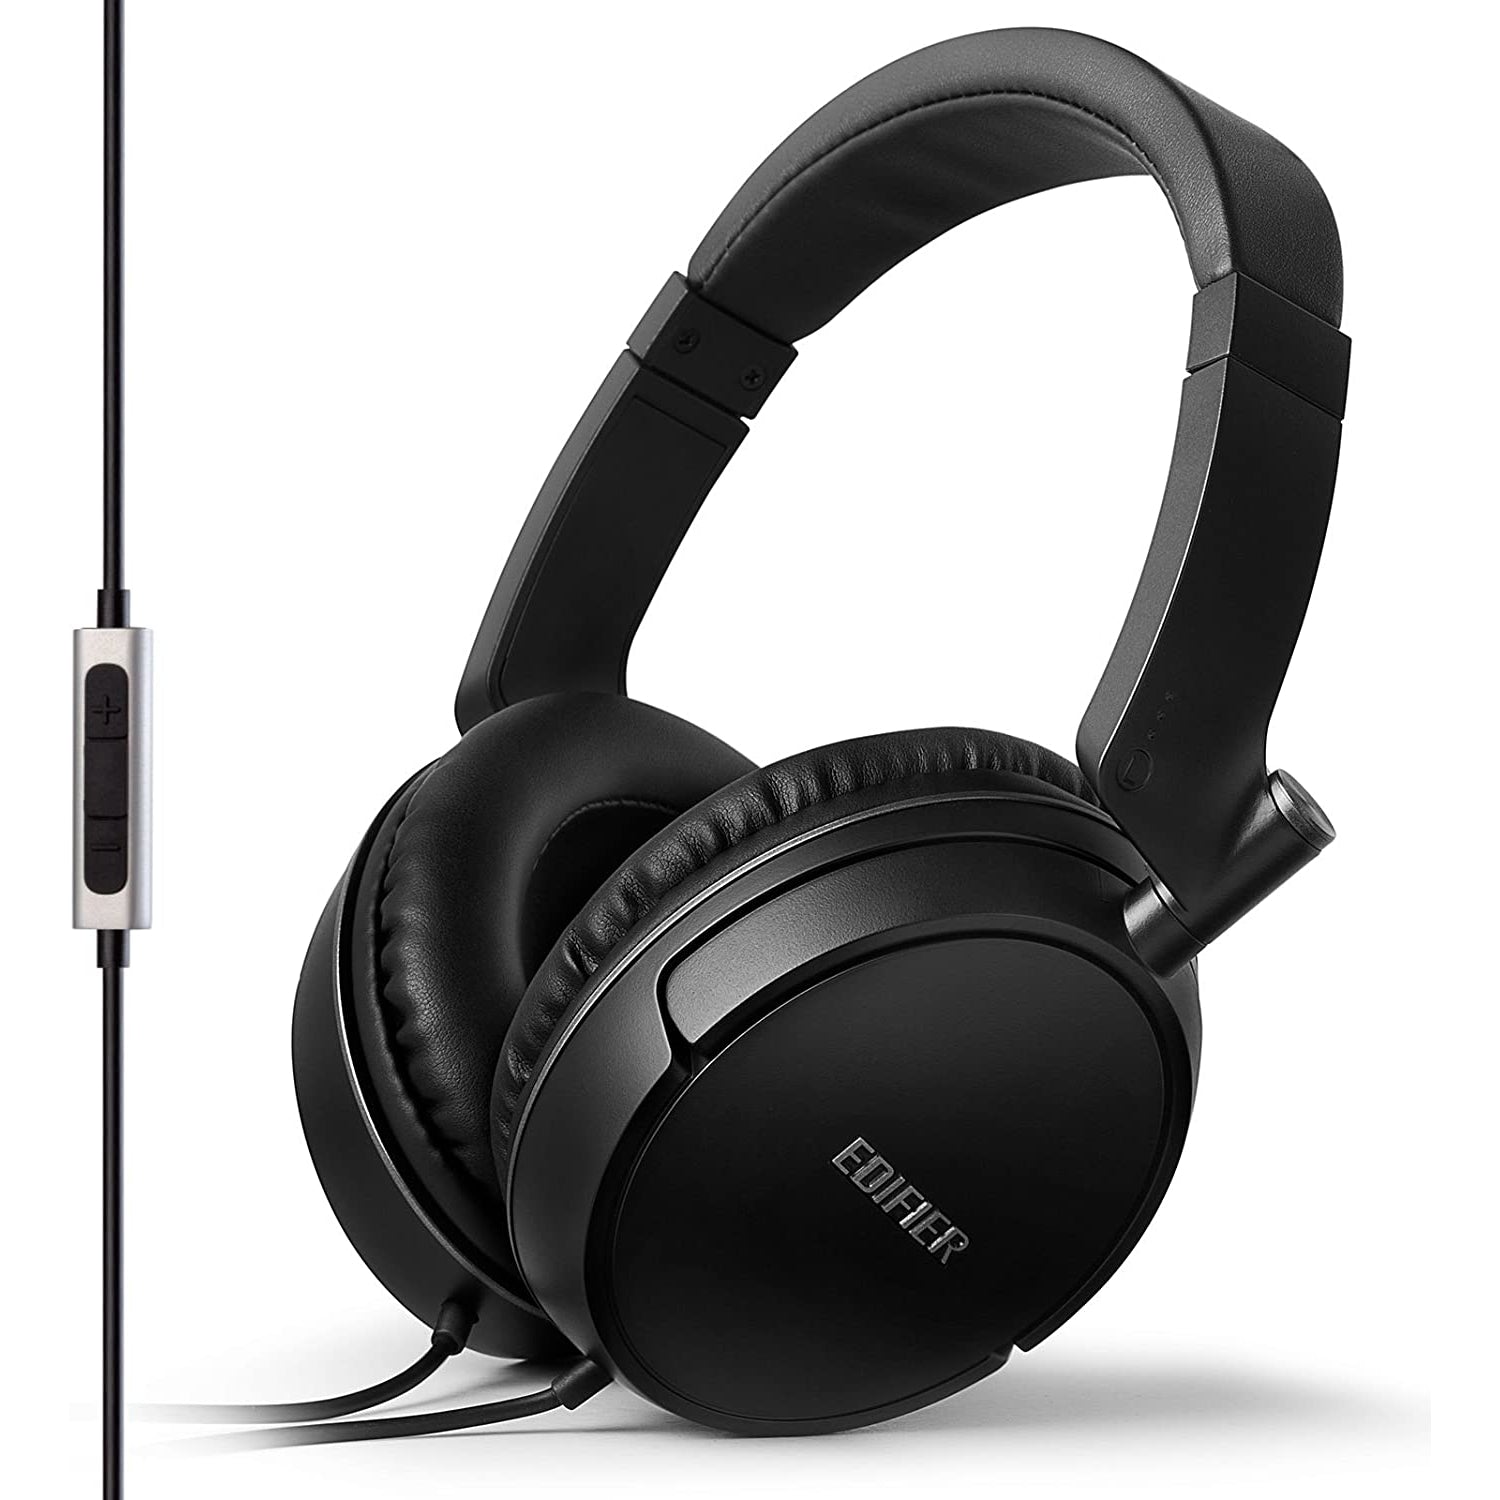 Edifier P841 Premium Hi-Fi Over-Ear Stereo Headphones - Black